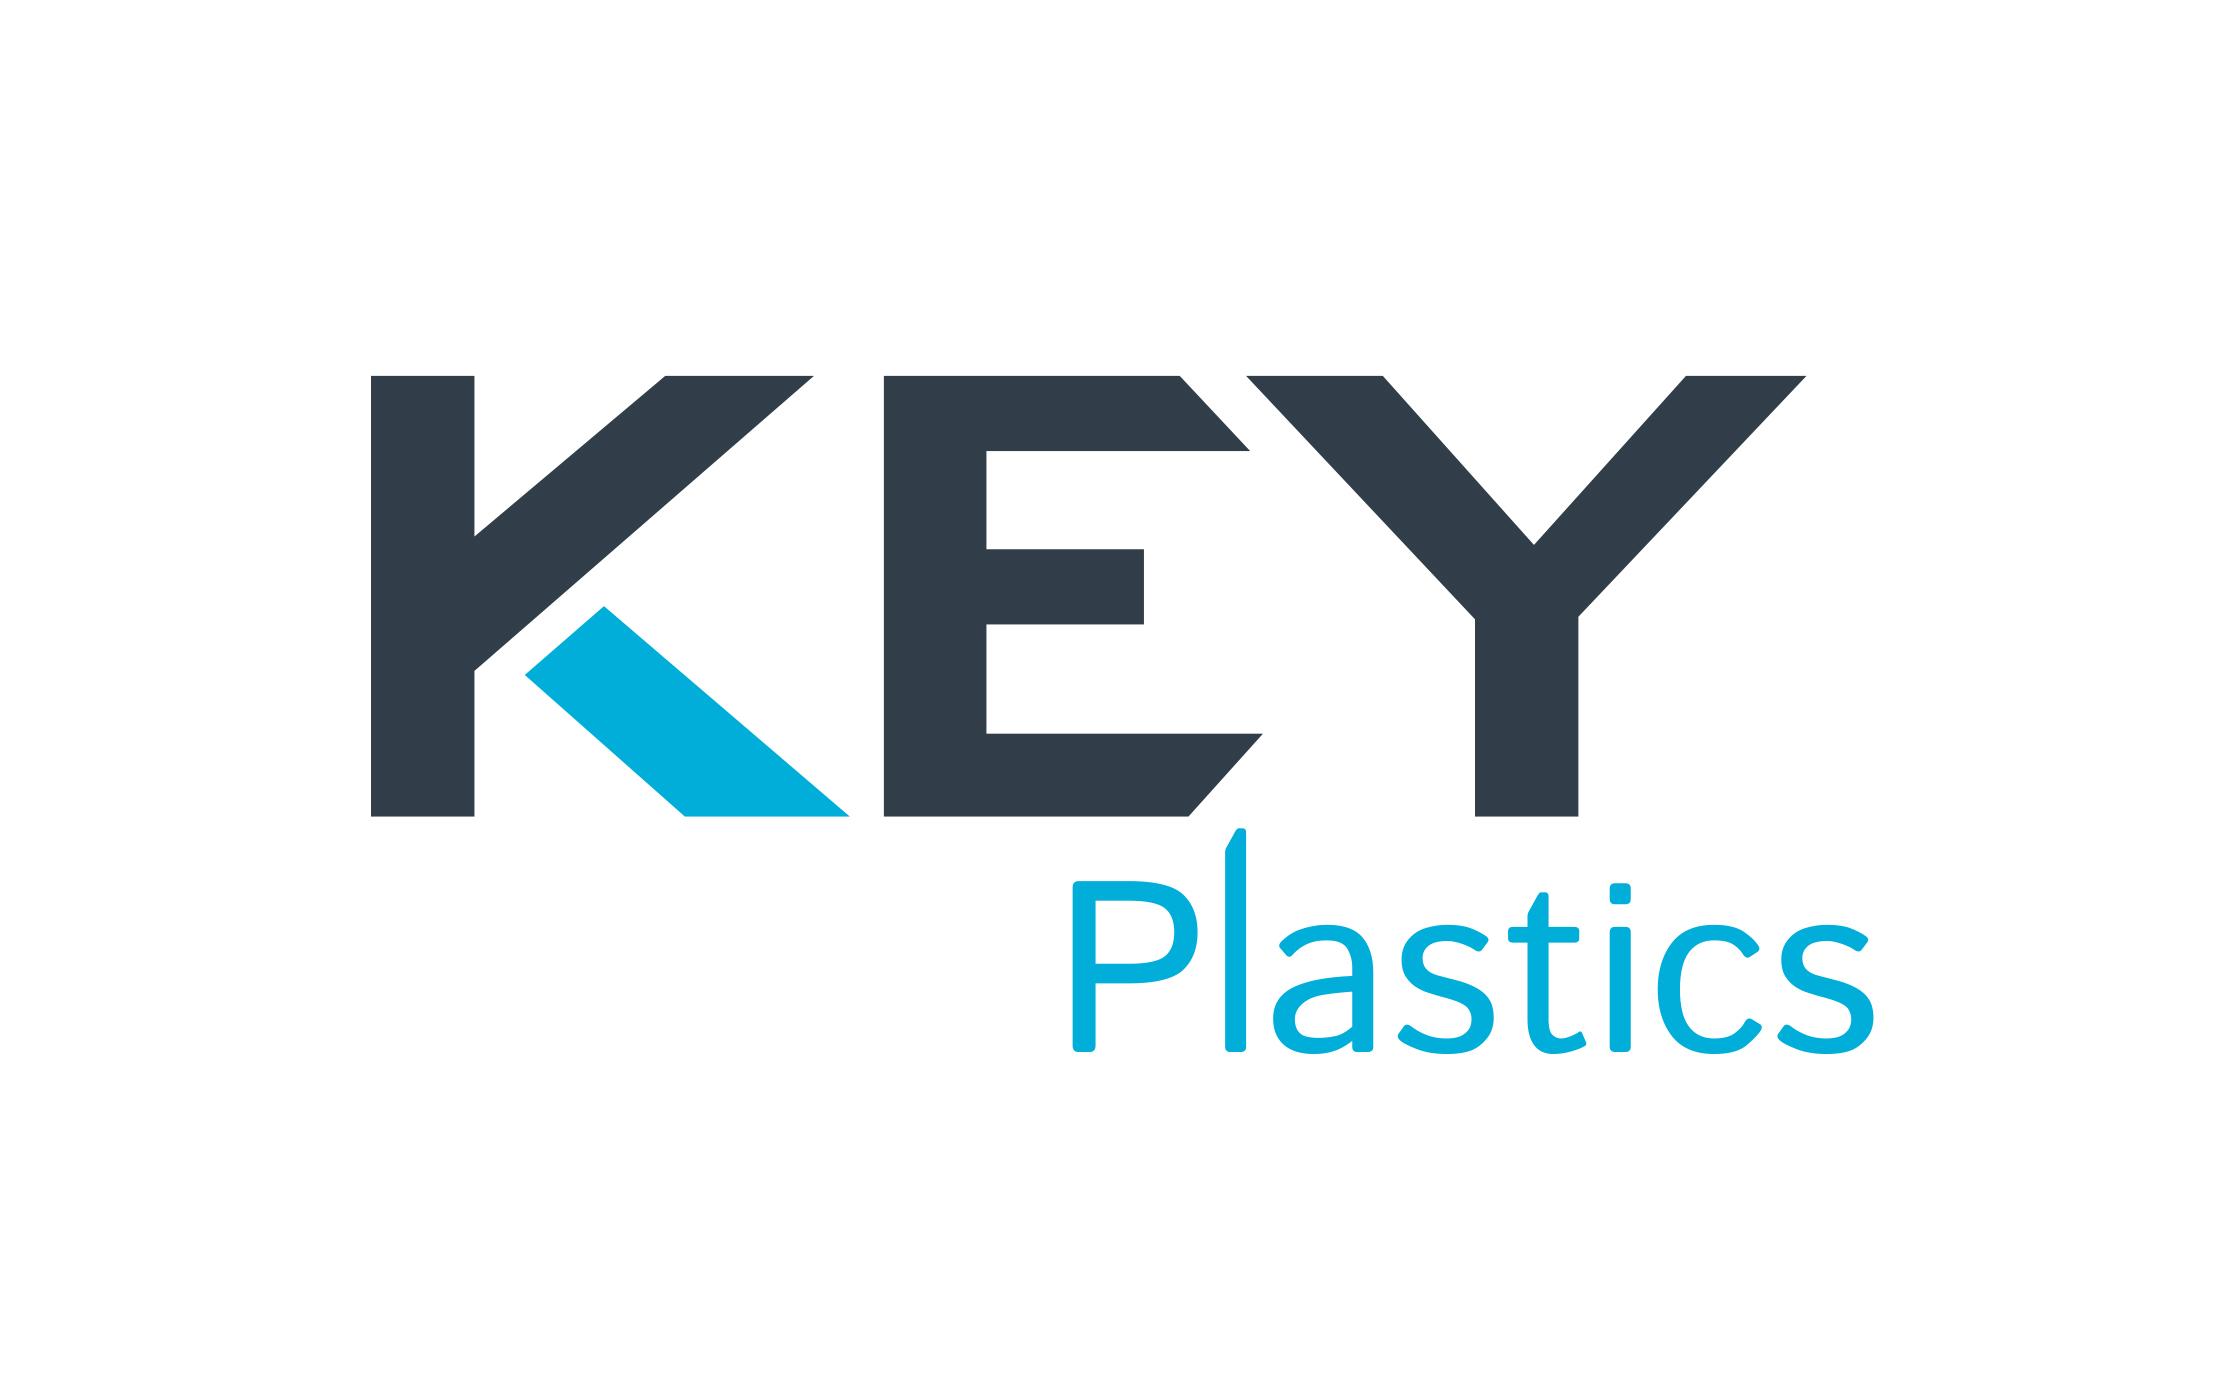 Key Plastics Ltd logo